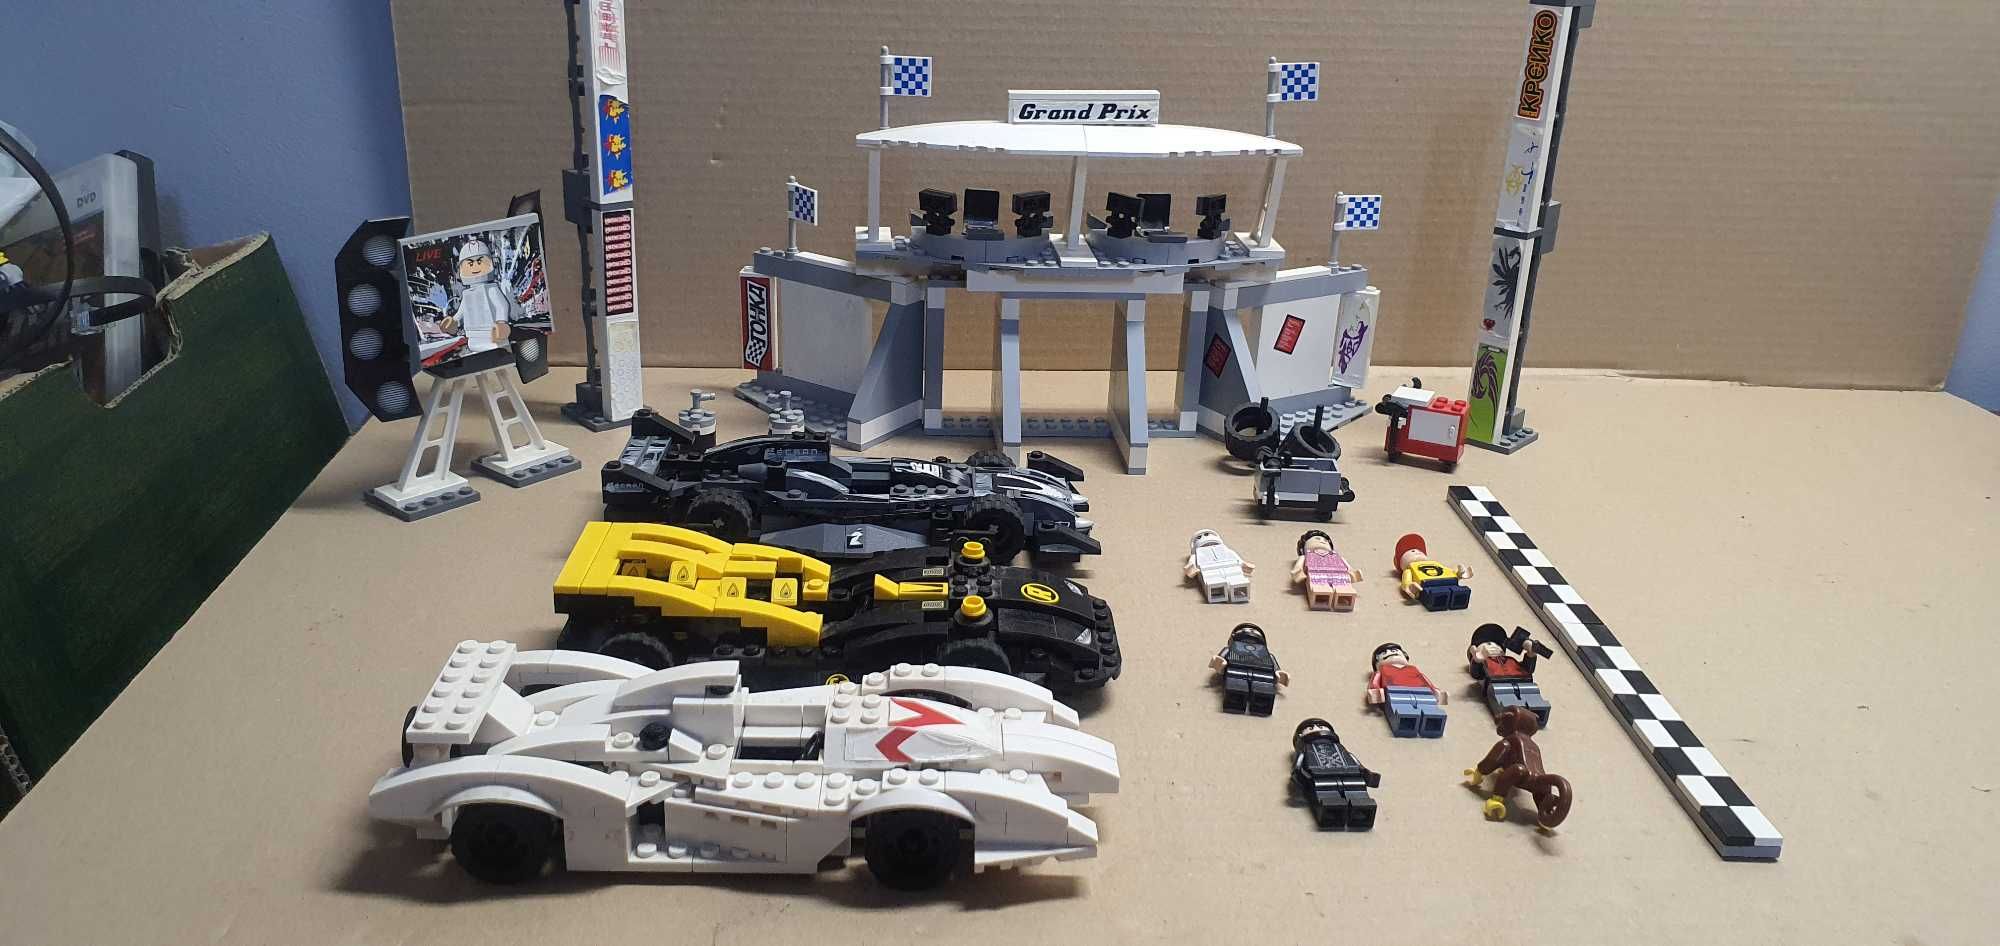 LEGO 8161 Grand Prix Race Speed Champions